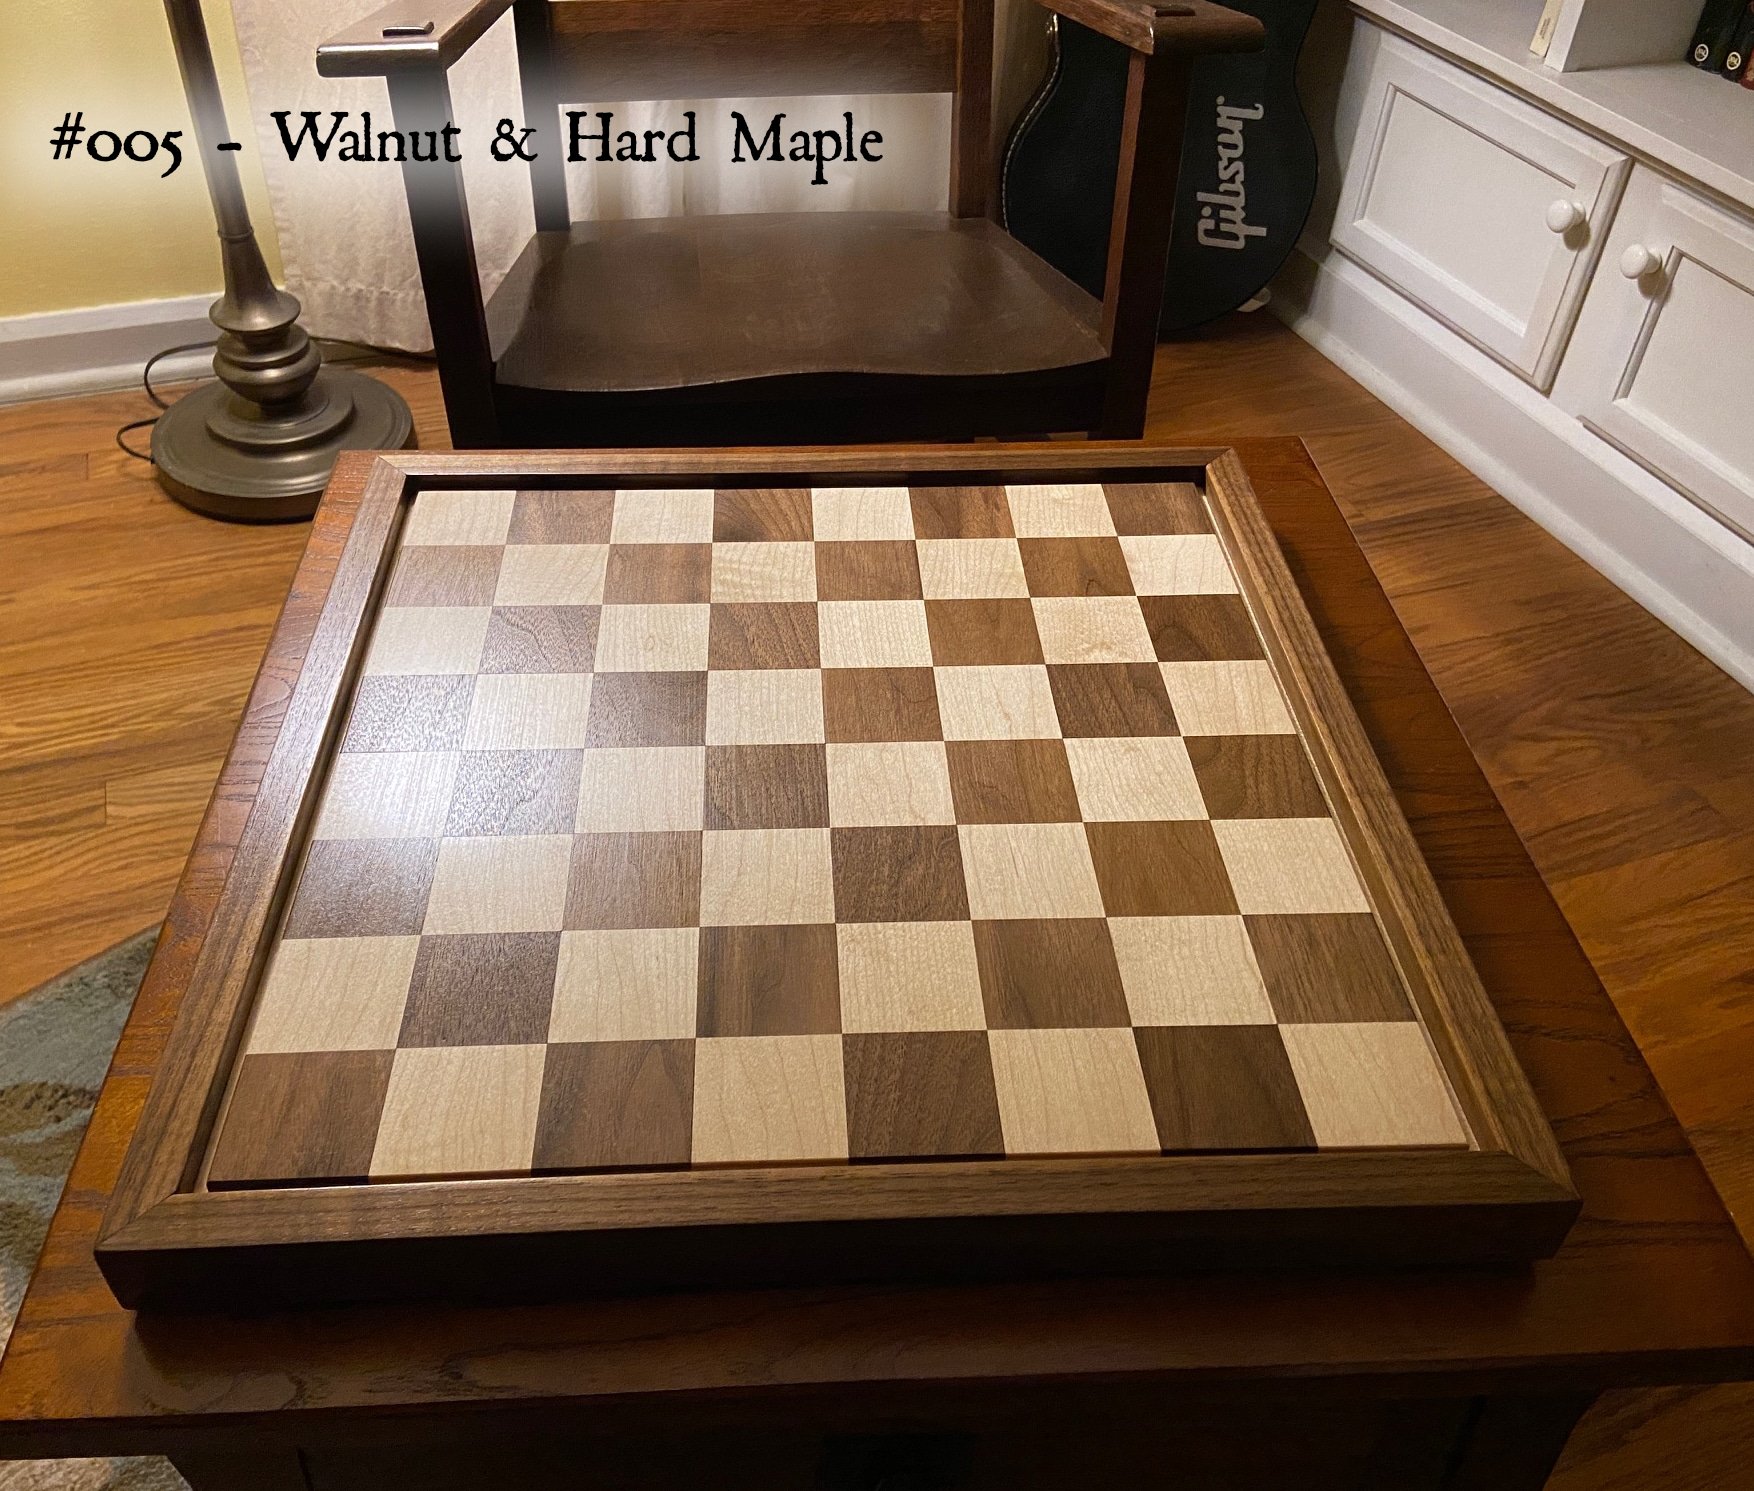 Board #005 – Walnut and Maple